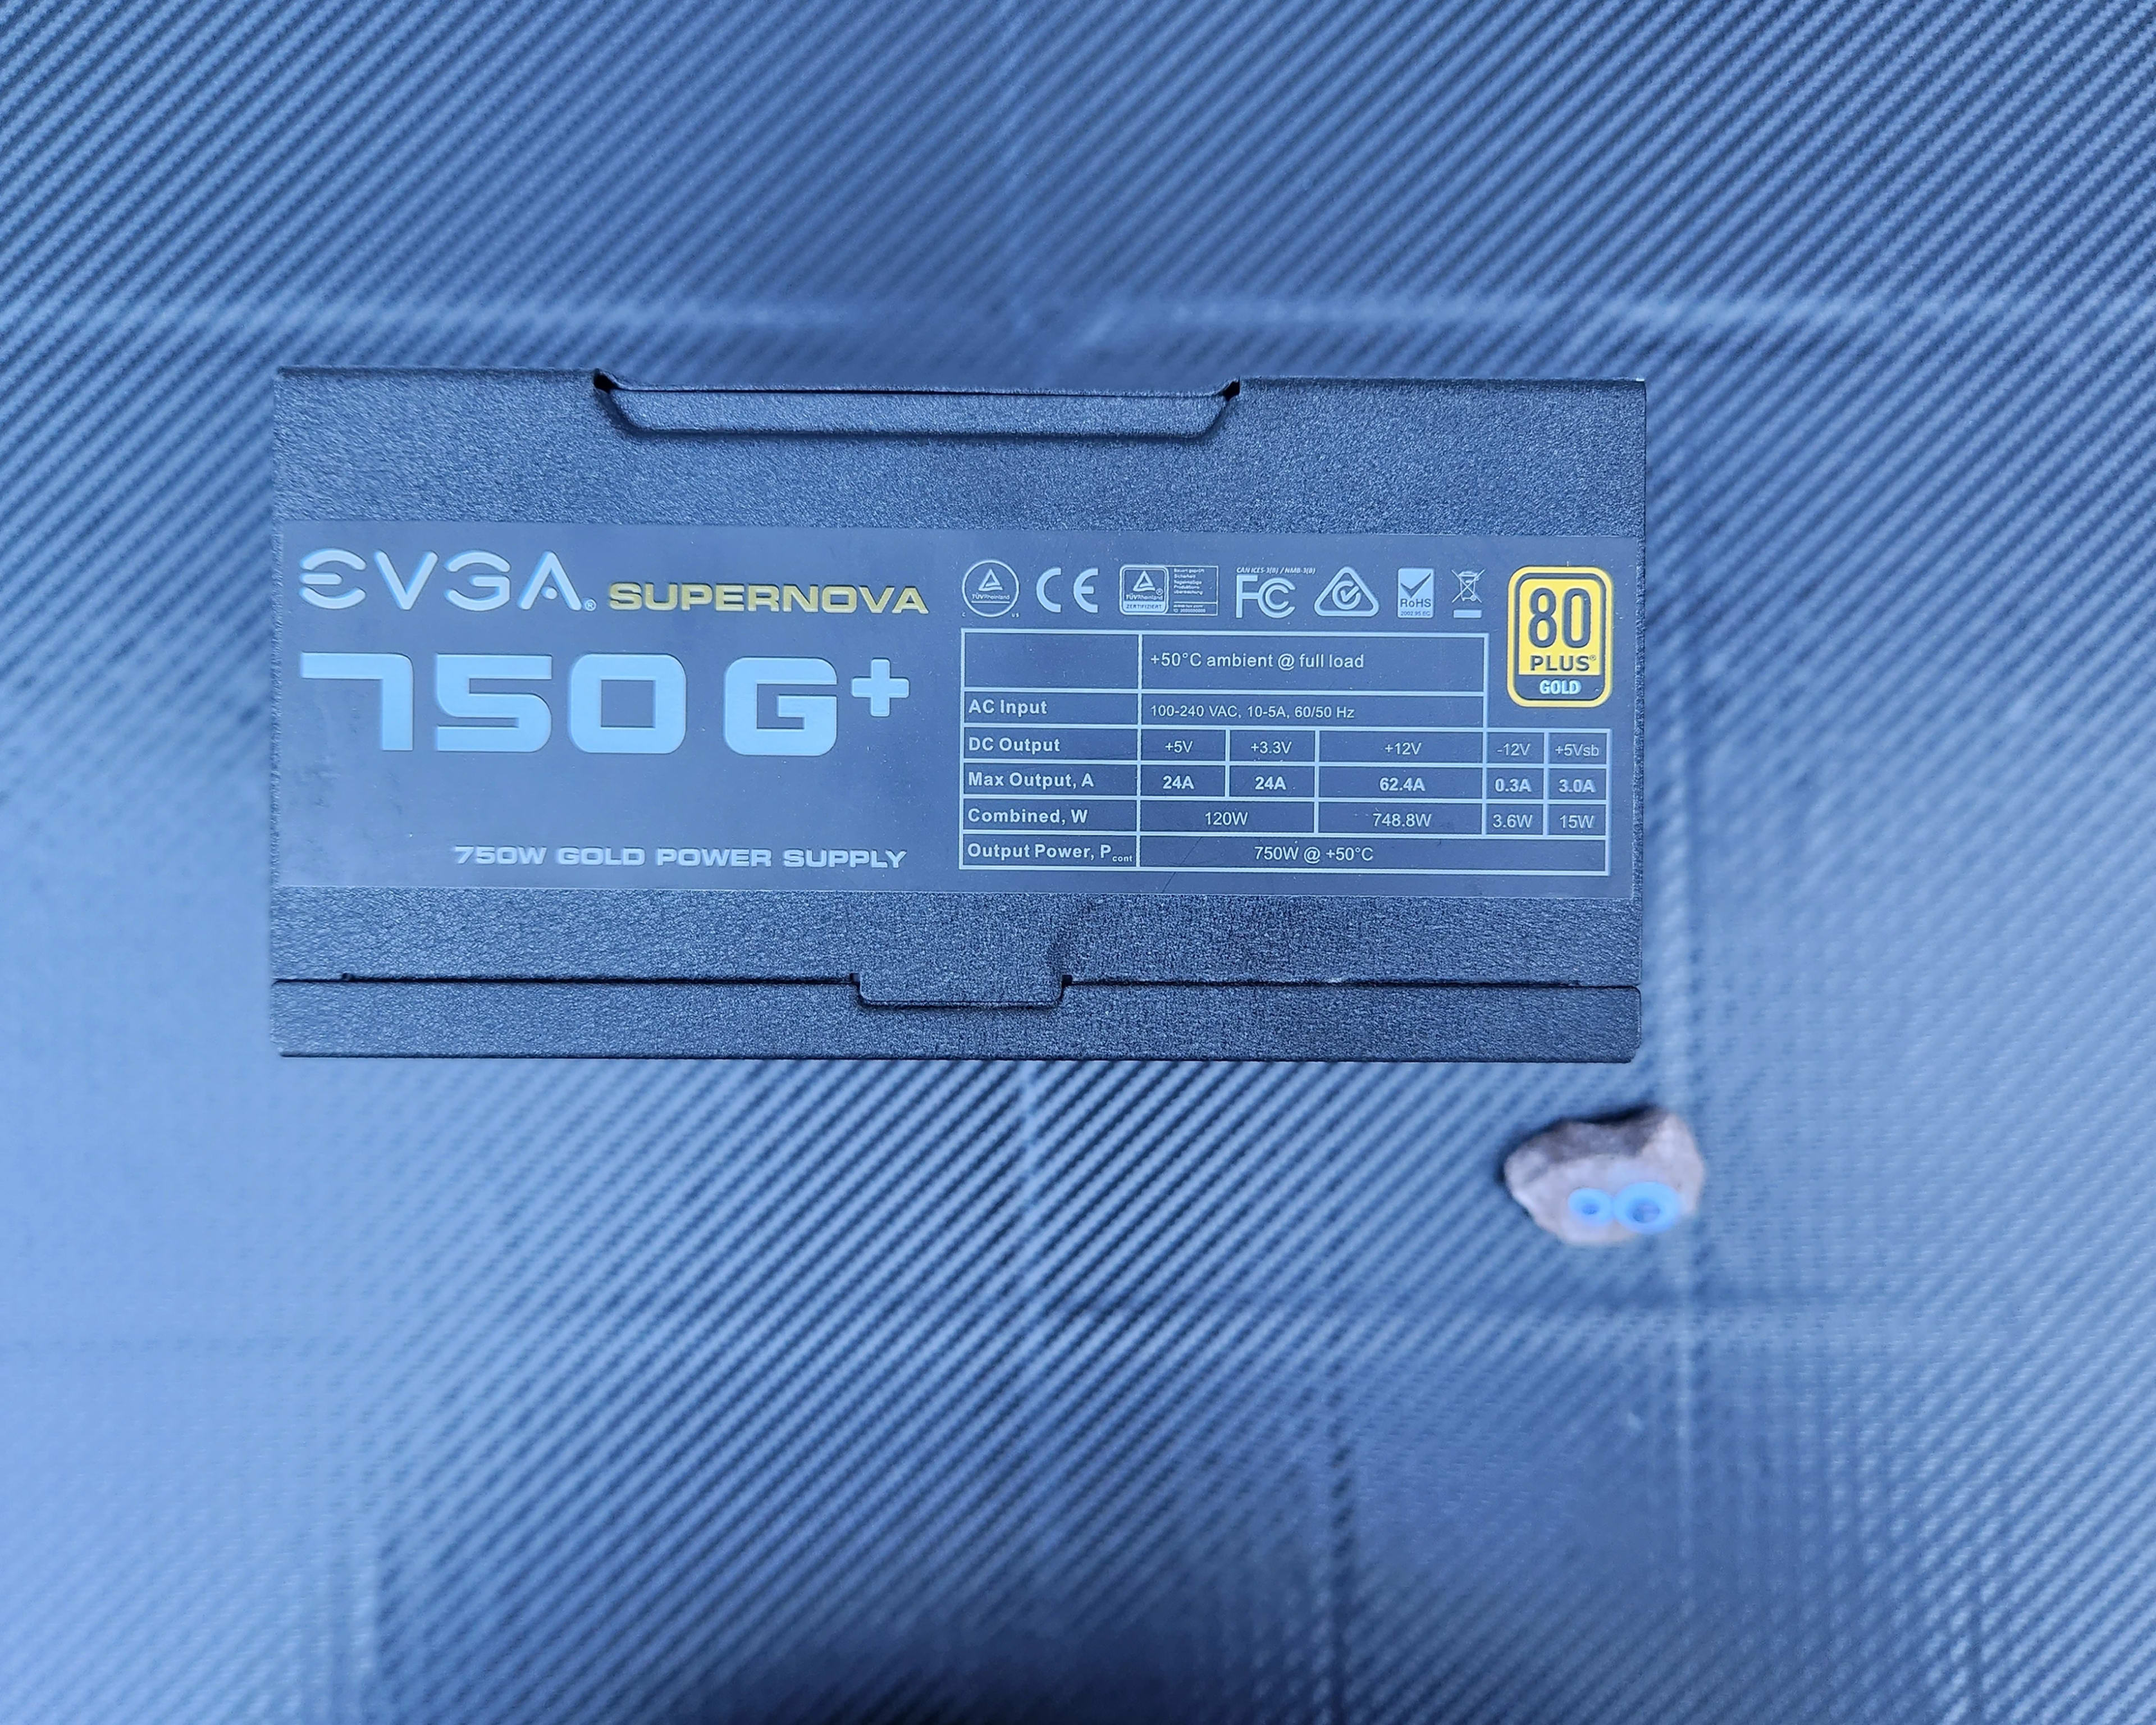 PSU ONLY - EVGA SuperNova 750 G+ - Used